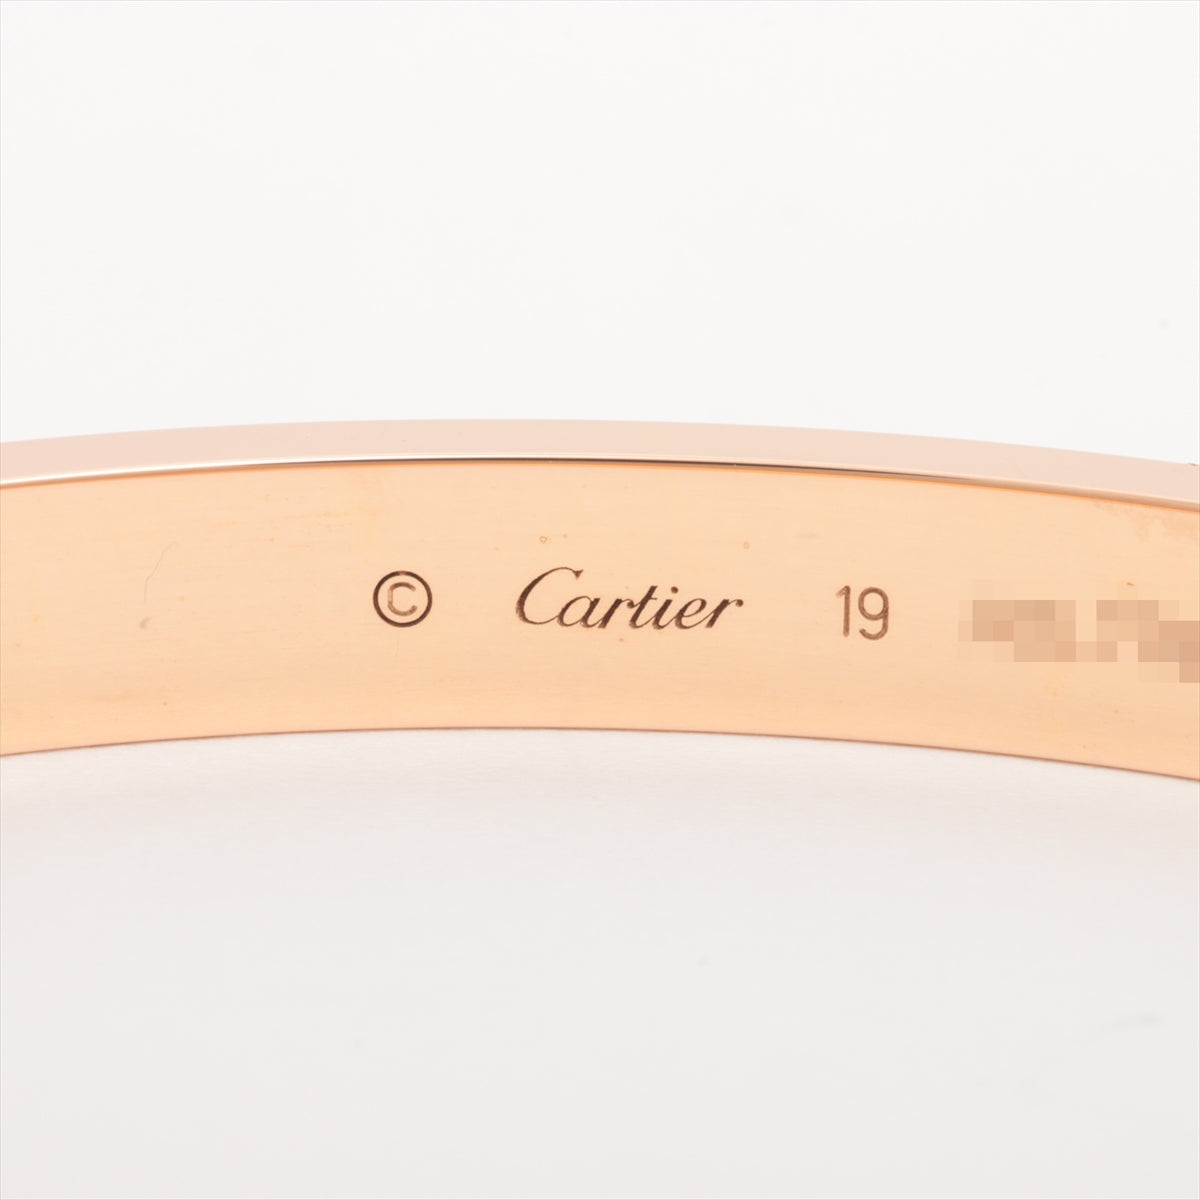 Cartier Love Bracelet 750(PG) 36.4g 19 With screwdriver